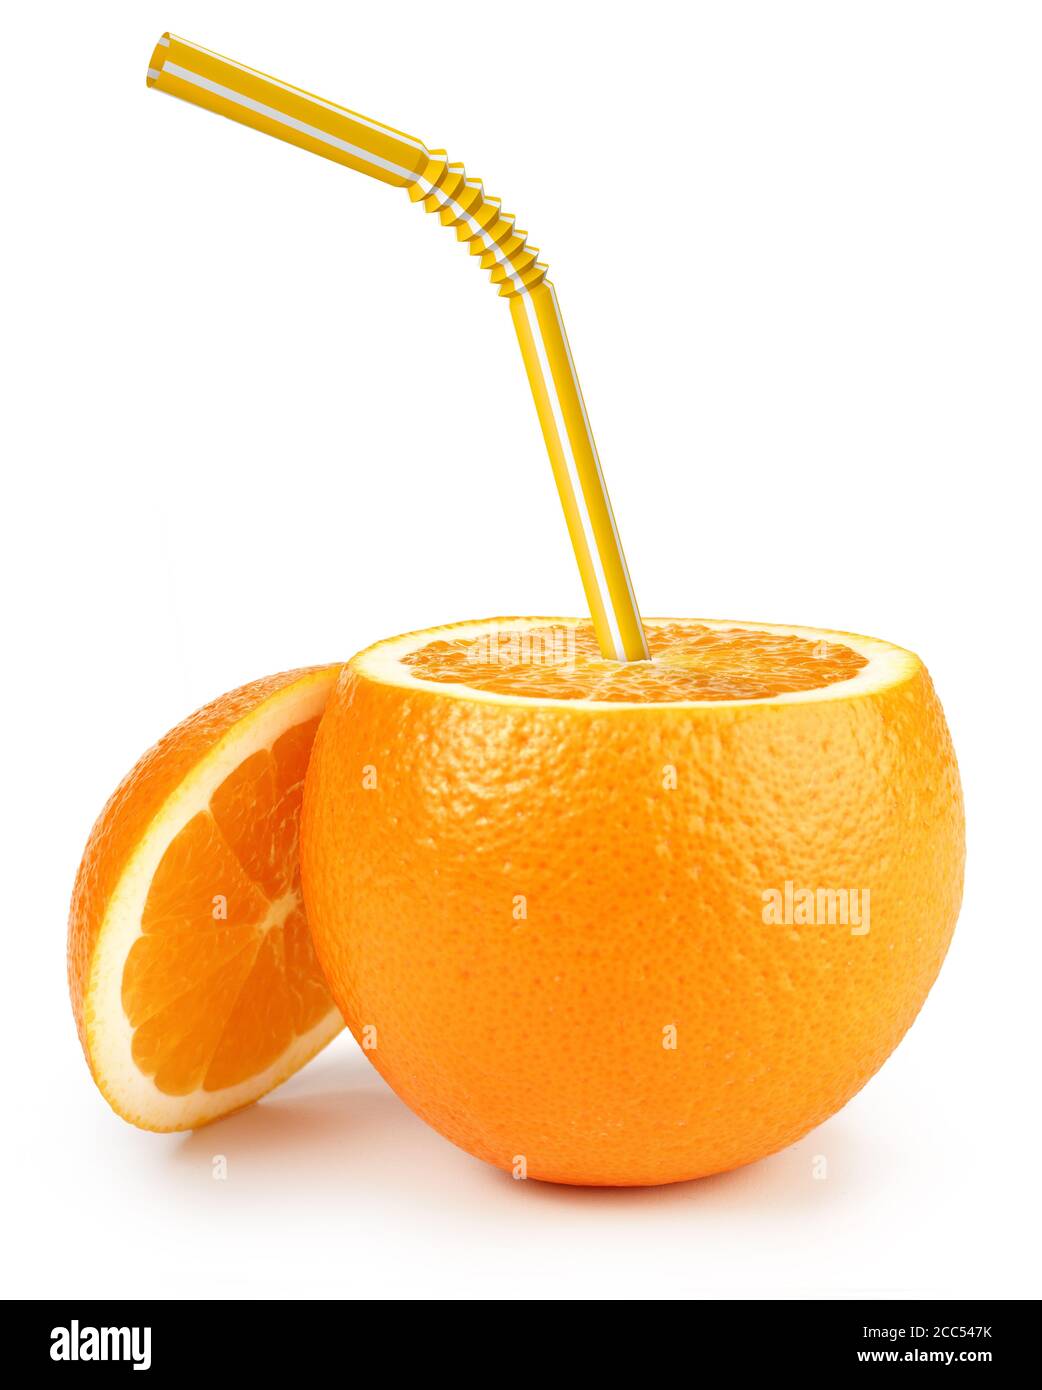 drinking straw inside an orange on white Stock Photo